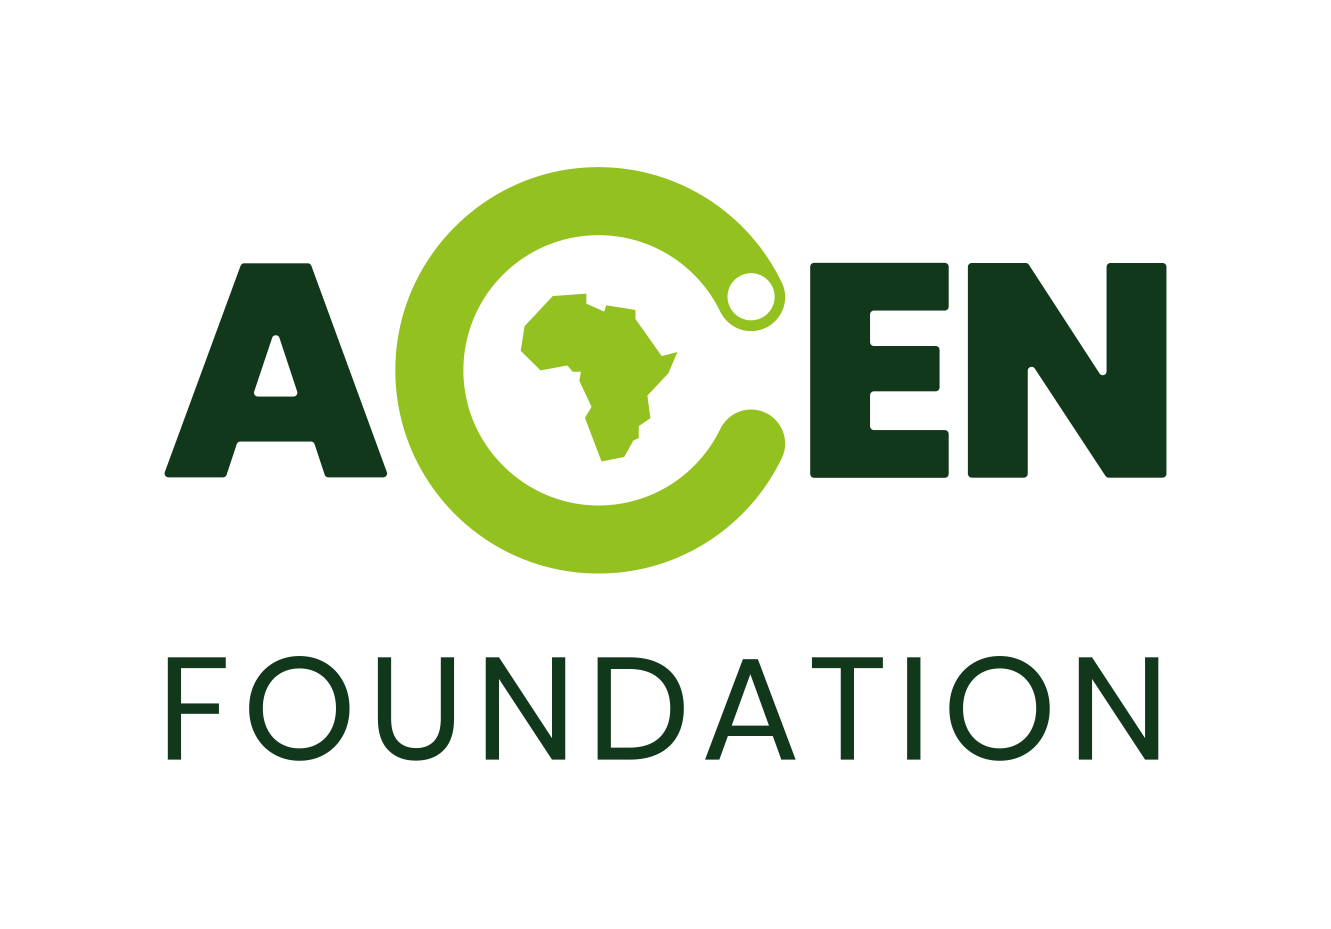 ACEN Foundation